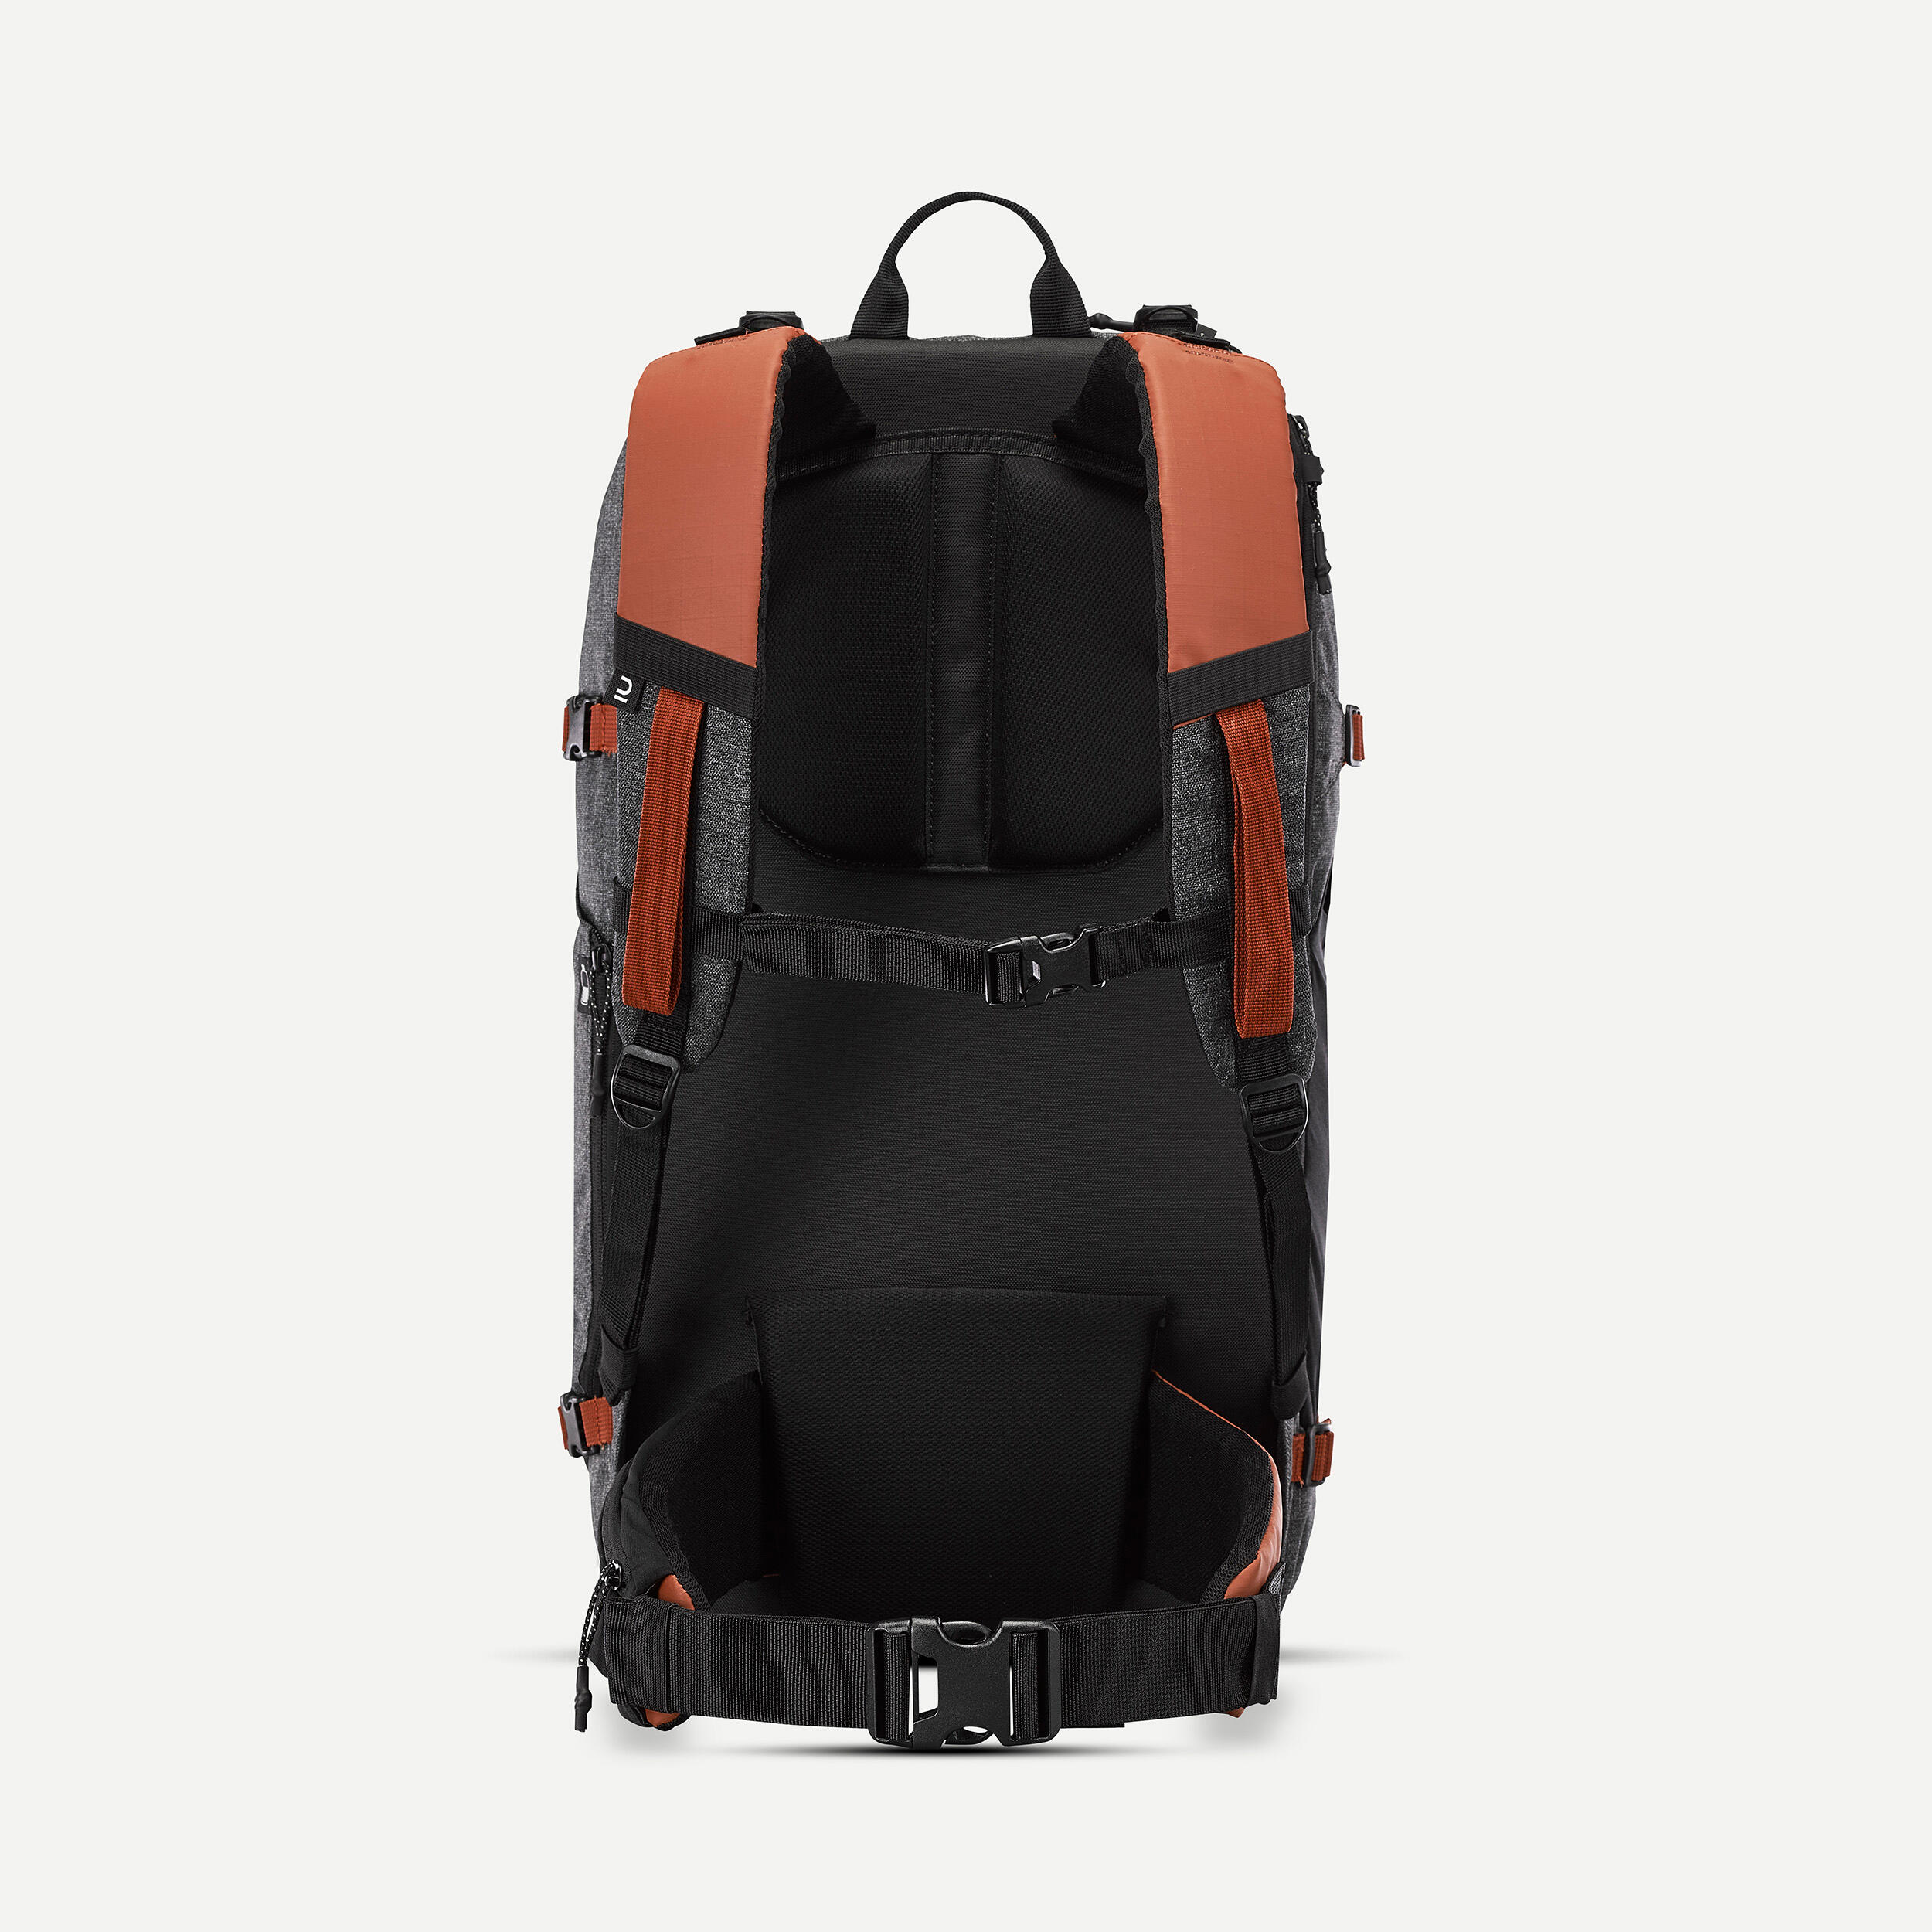 Travel Backpack 40 L - Travel 500 ORGANIZER Orange 5/10